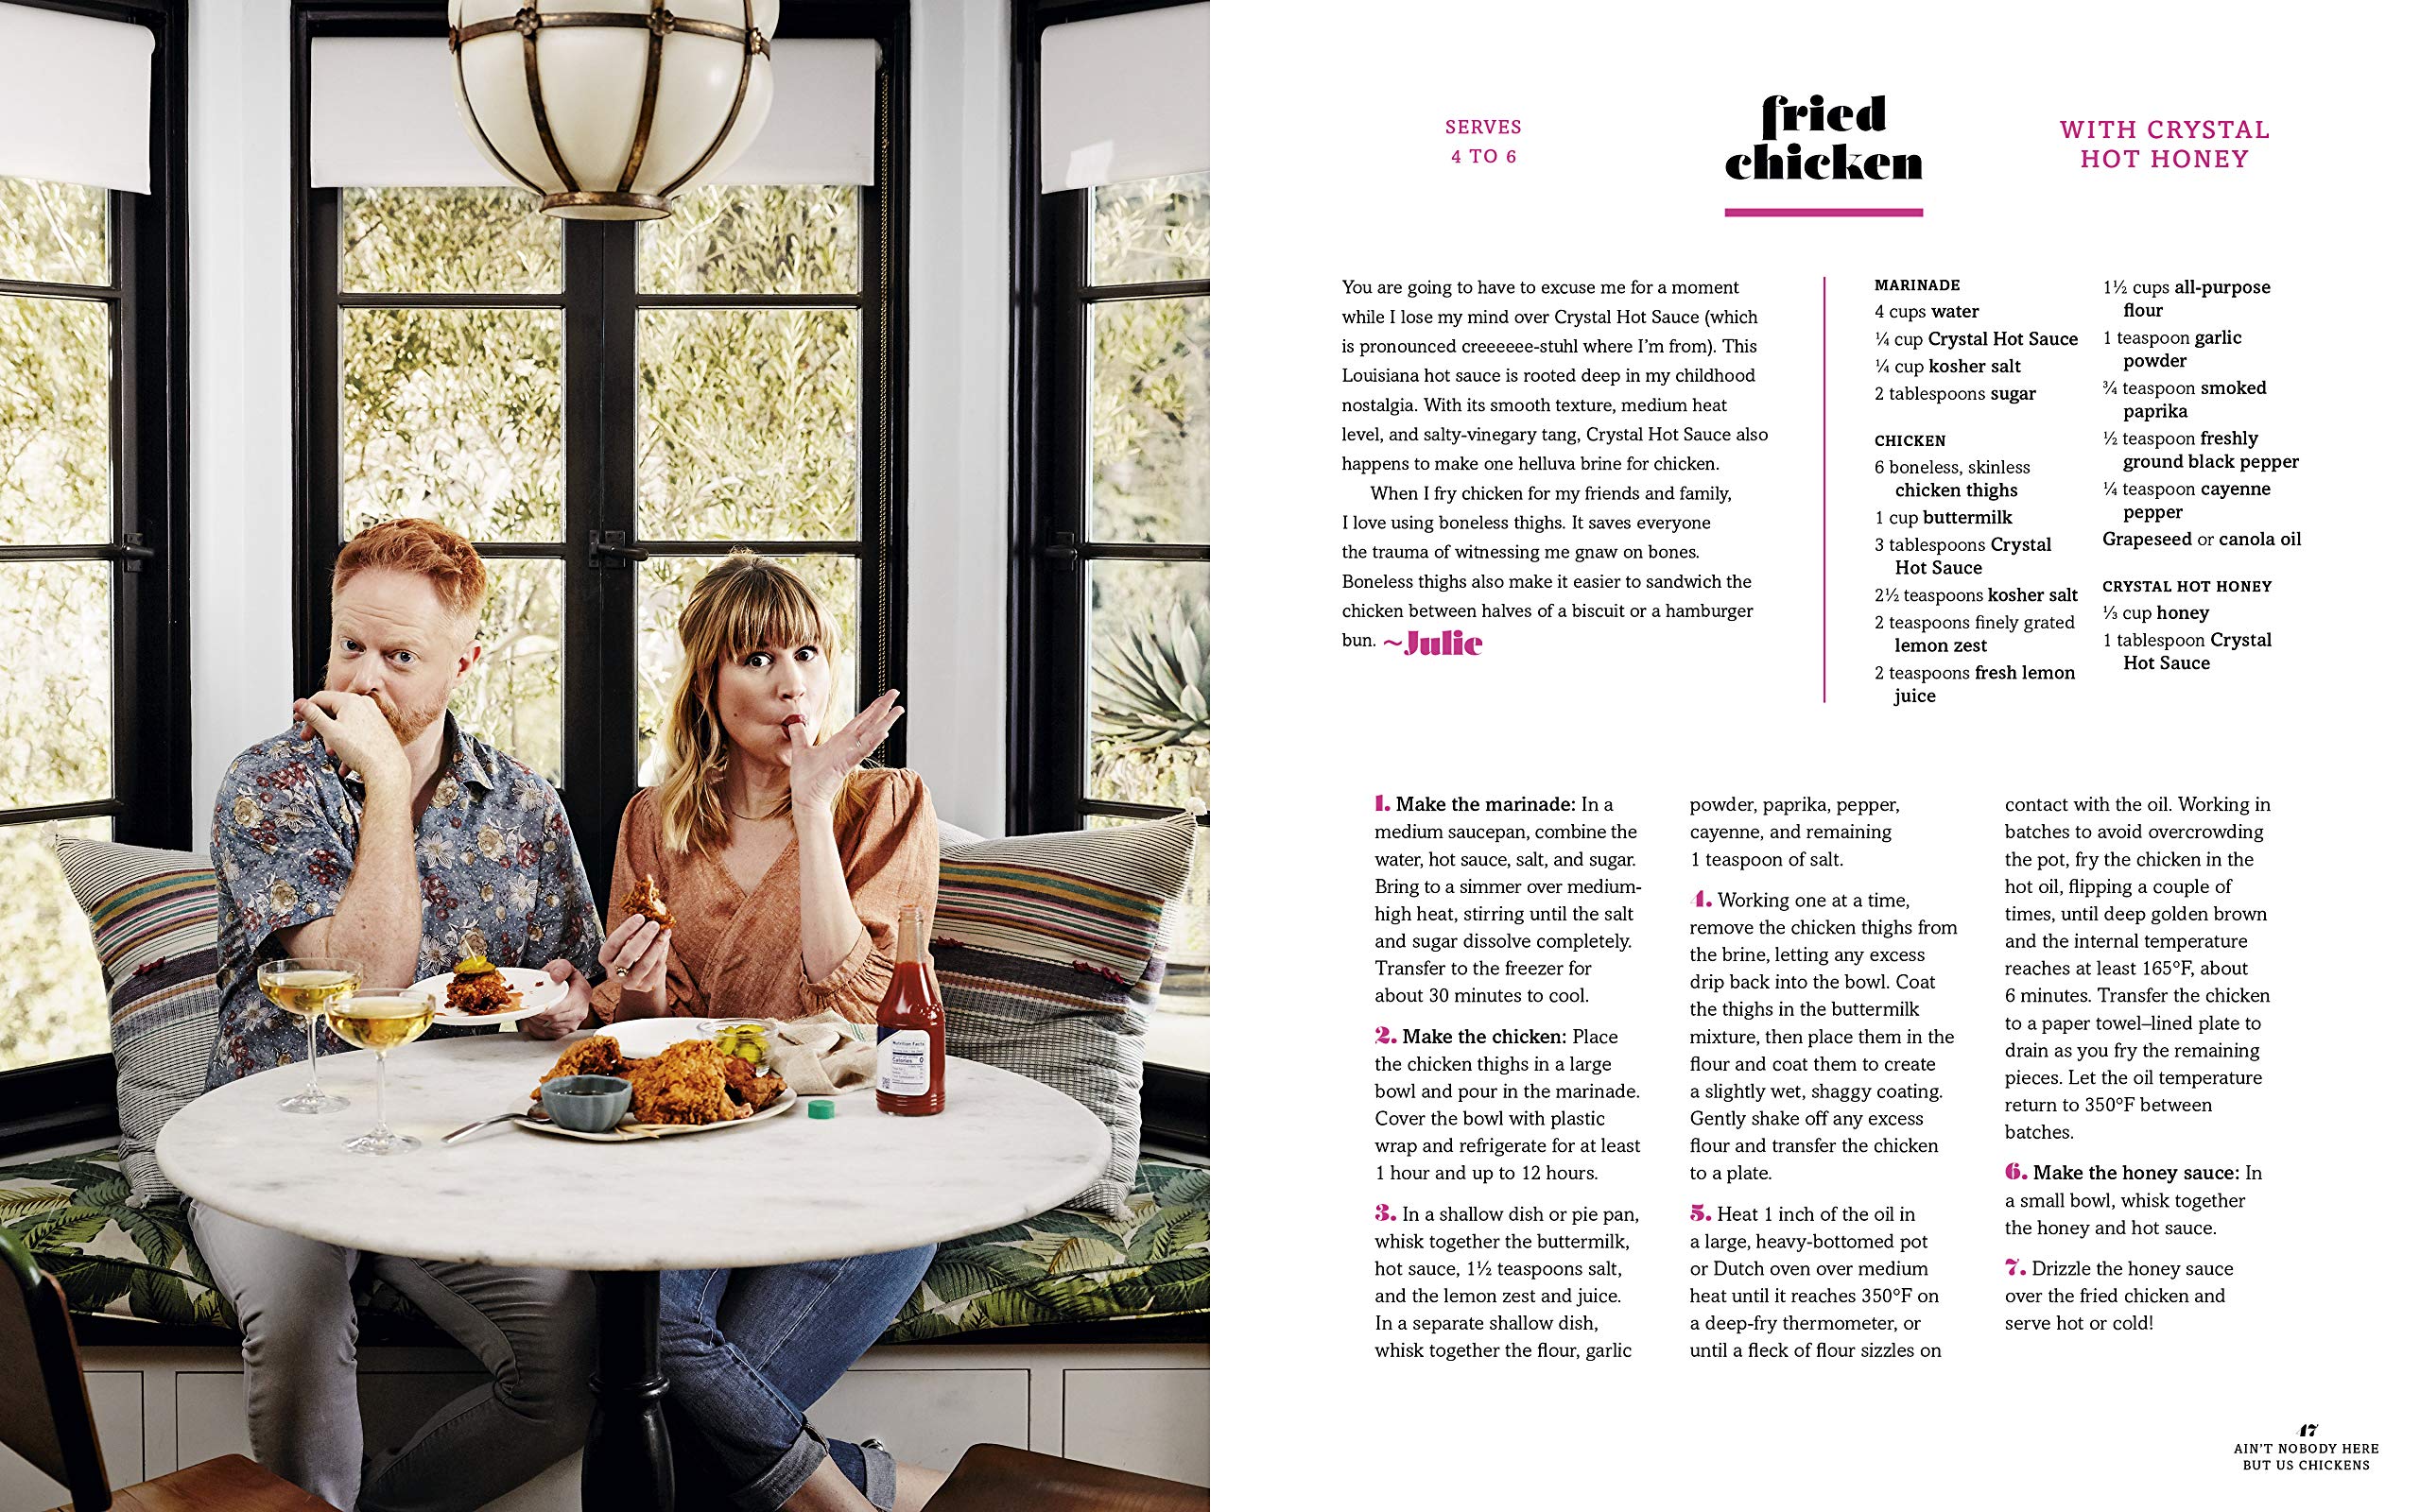 Food Between Friends: A Cookbook *Signed* (Jesse Tyler Ferguson, Julie Tanous)